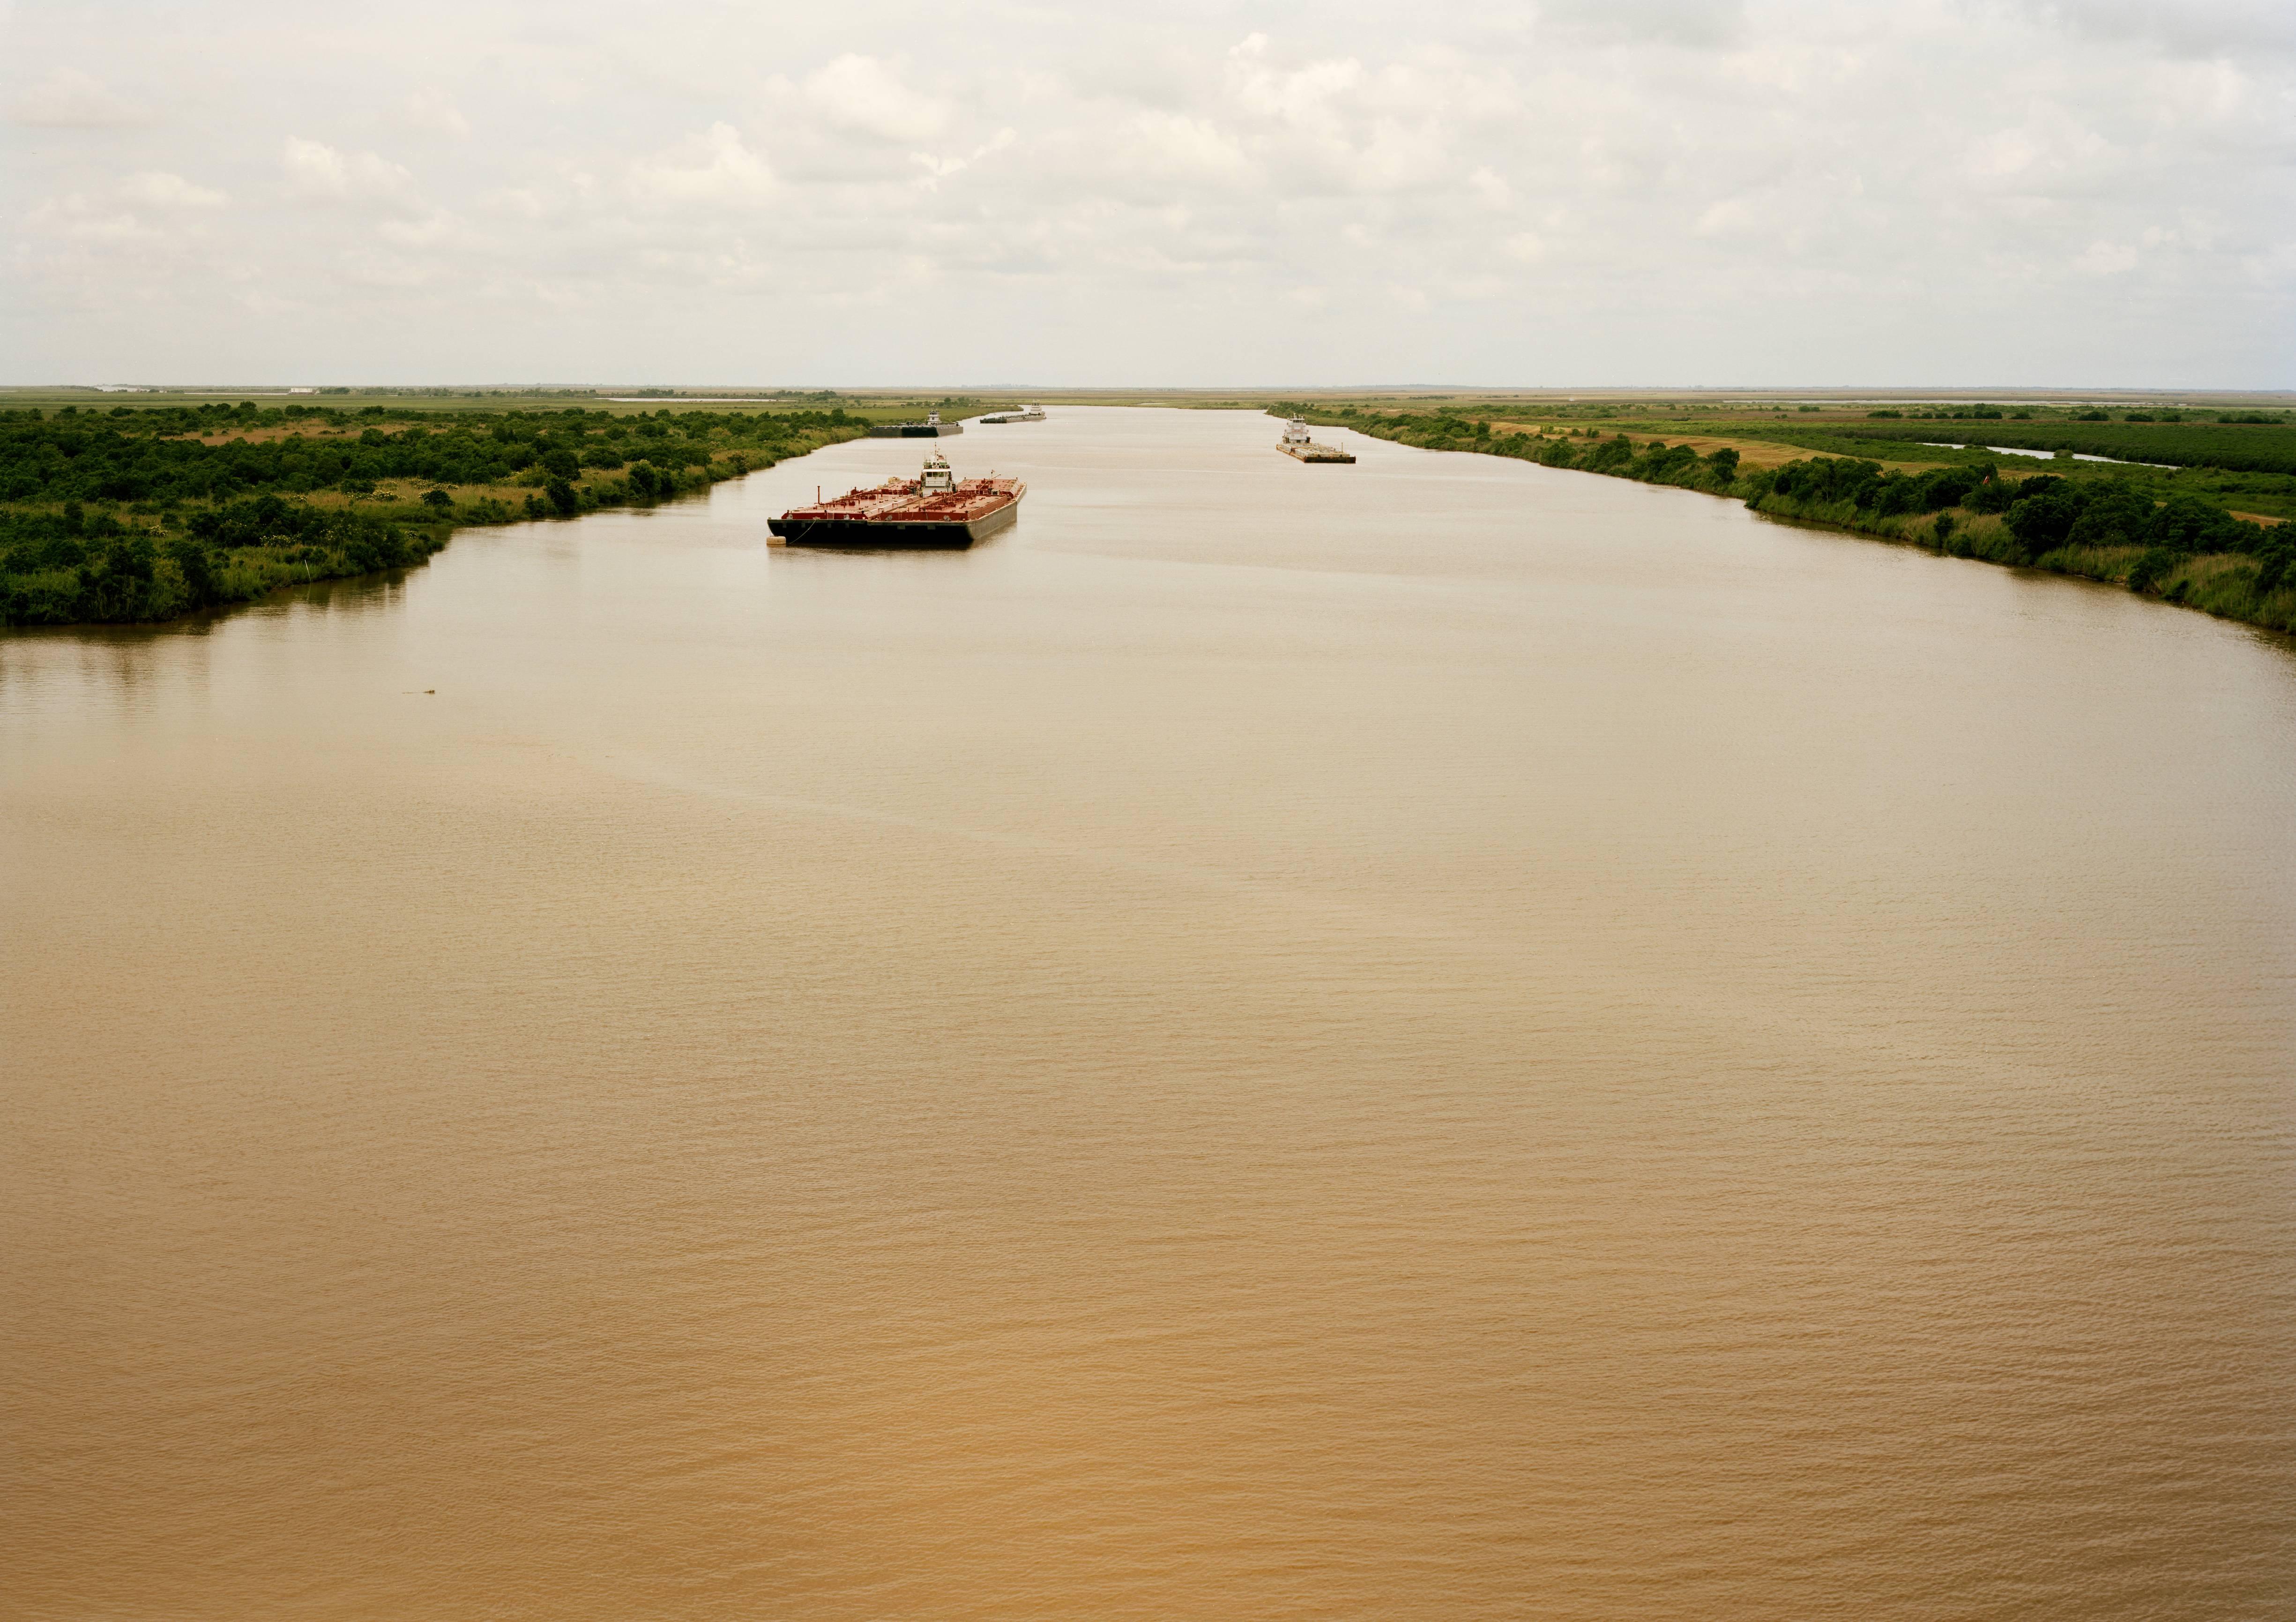 Victoria Sambunaris Landscape Photograph - Untitled (Intercoastal Waterway with Red Barge), Bolivar Peninsula, Texas